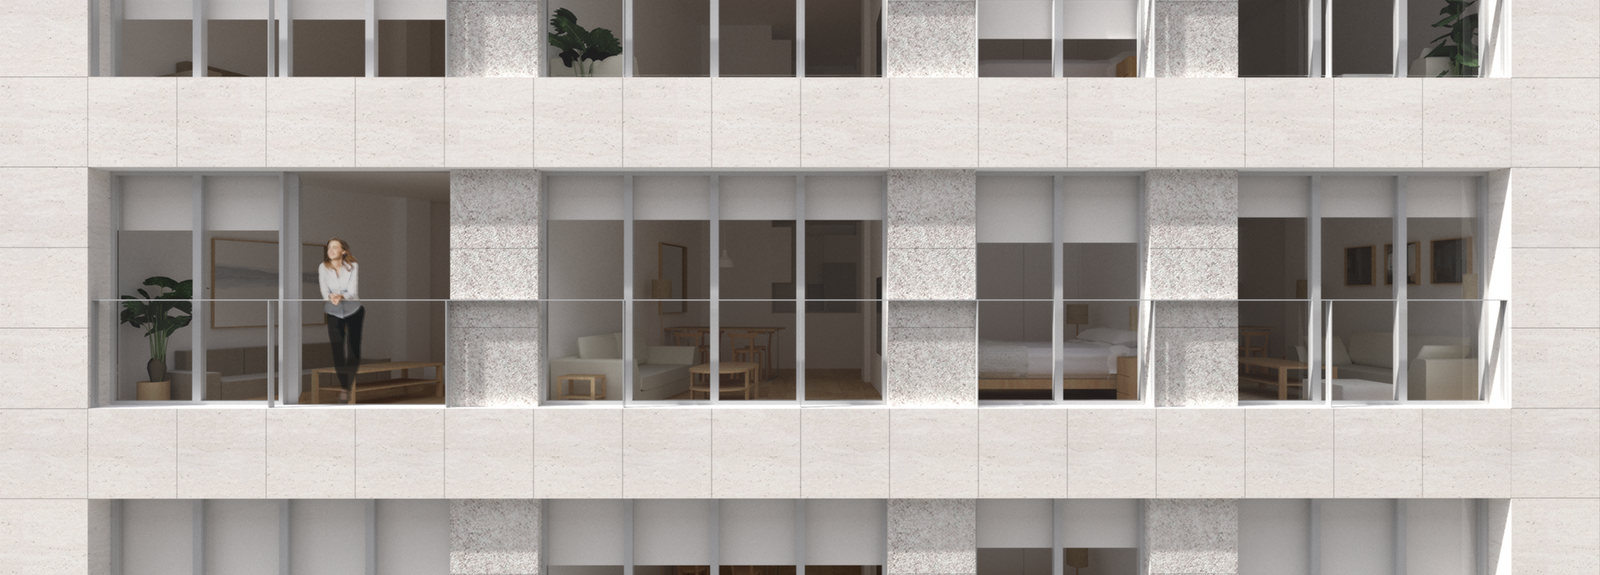 Imagen Portada_2-maiquez54-maiquez-54-madrid-retiro-arquitectura-diseño-interior-fachada-piedra-venta-piso-apartamento-caliza-vidrio-acero-granito-ventana